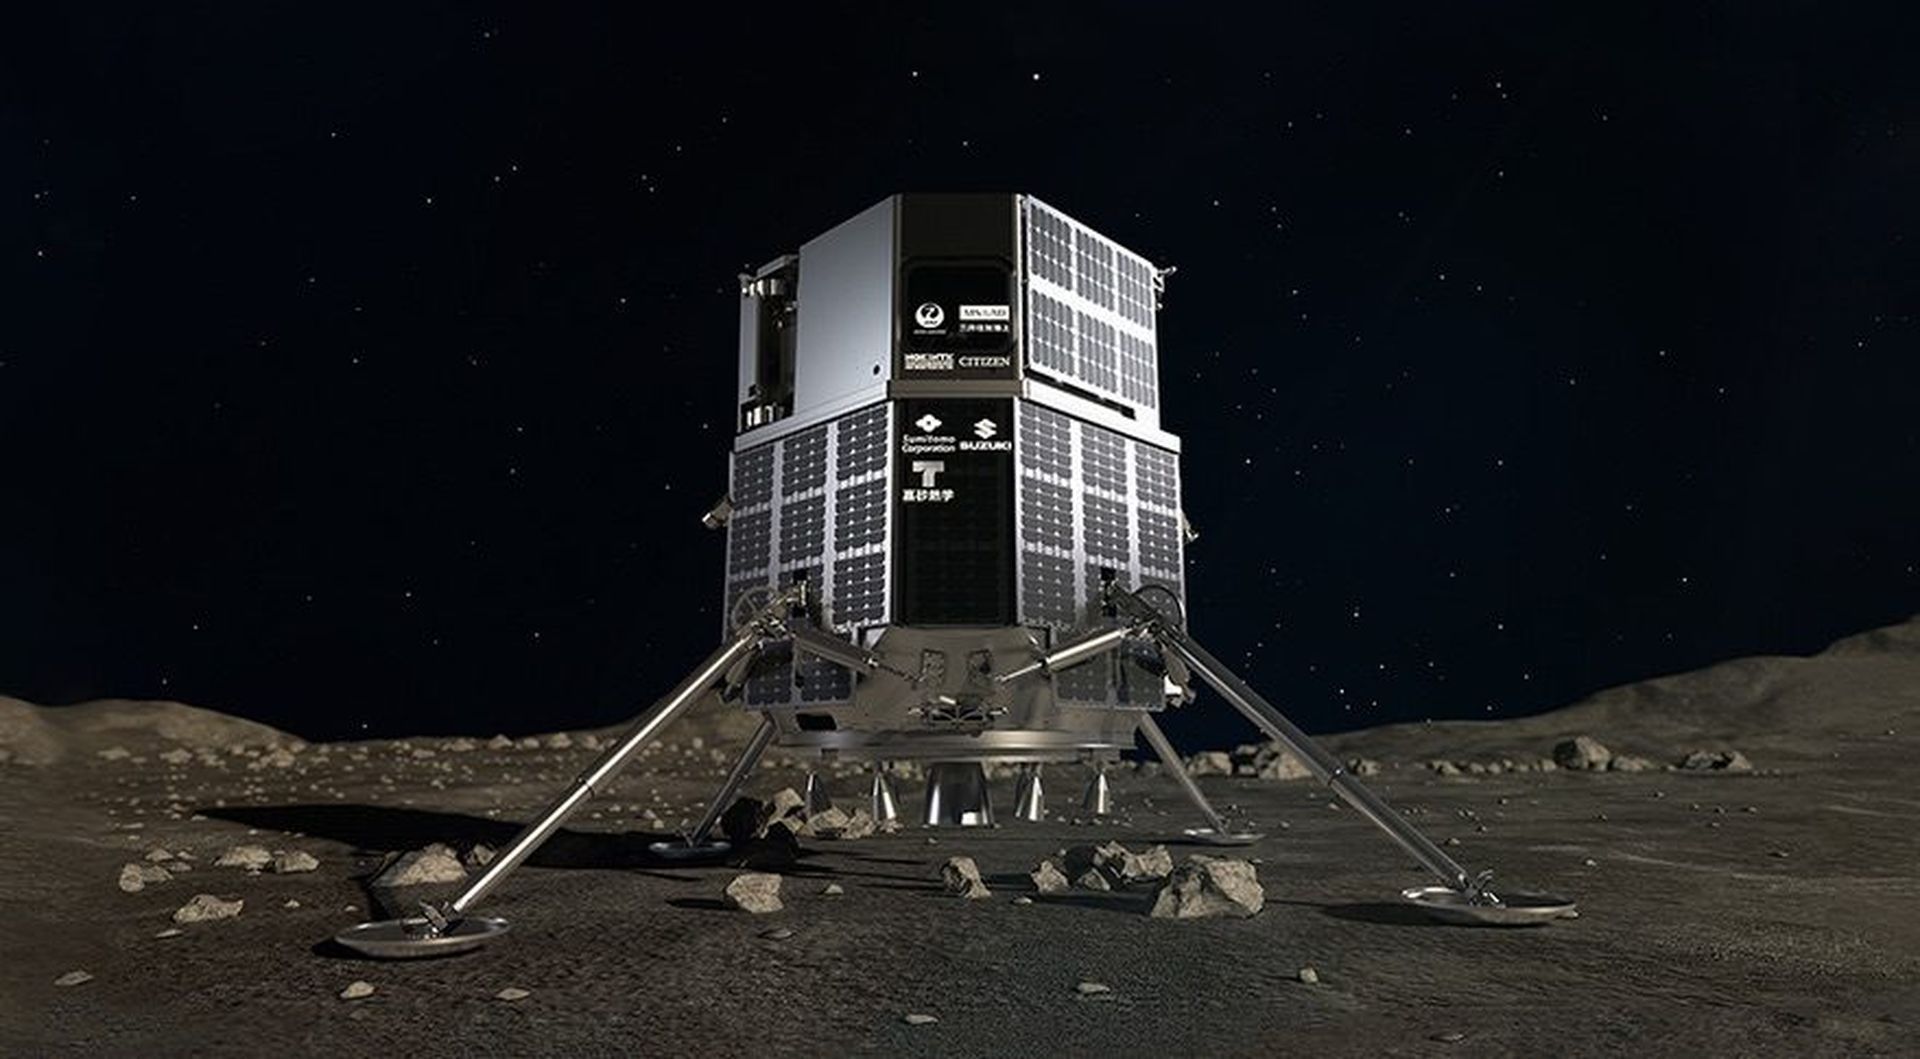 Commercial lunar Japanese moonlander "Hakuto-R" presumed lost in space